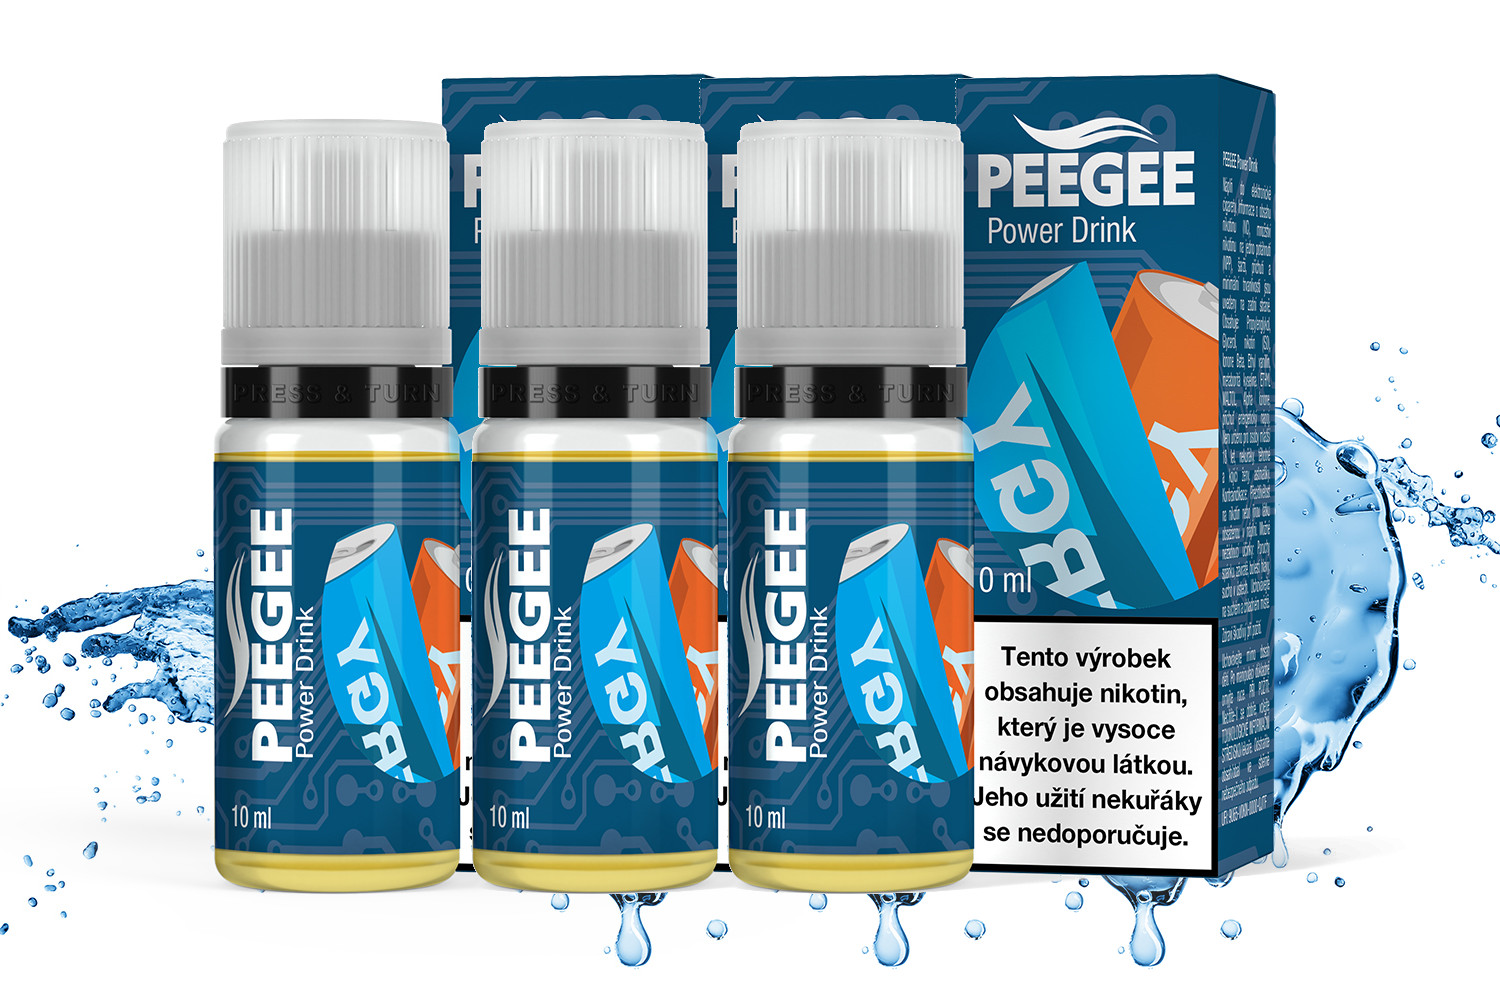 PEEGEE - Energetický nápoj (Power Drink) 3x10ml Obsah nikotinu: 6mg